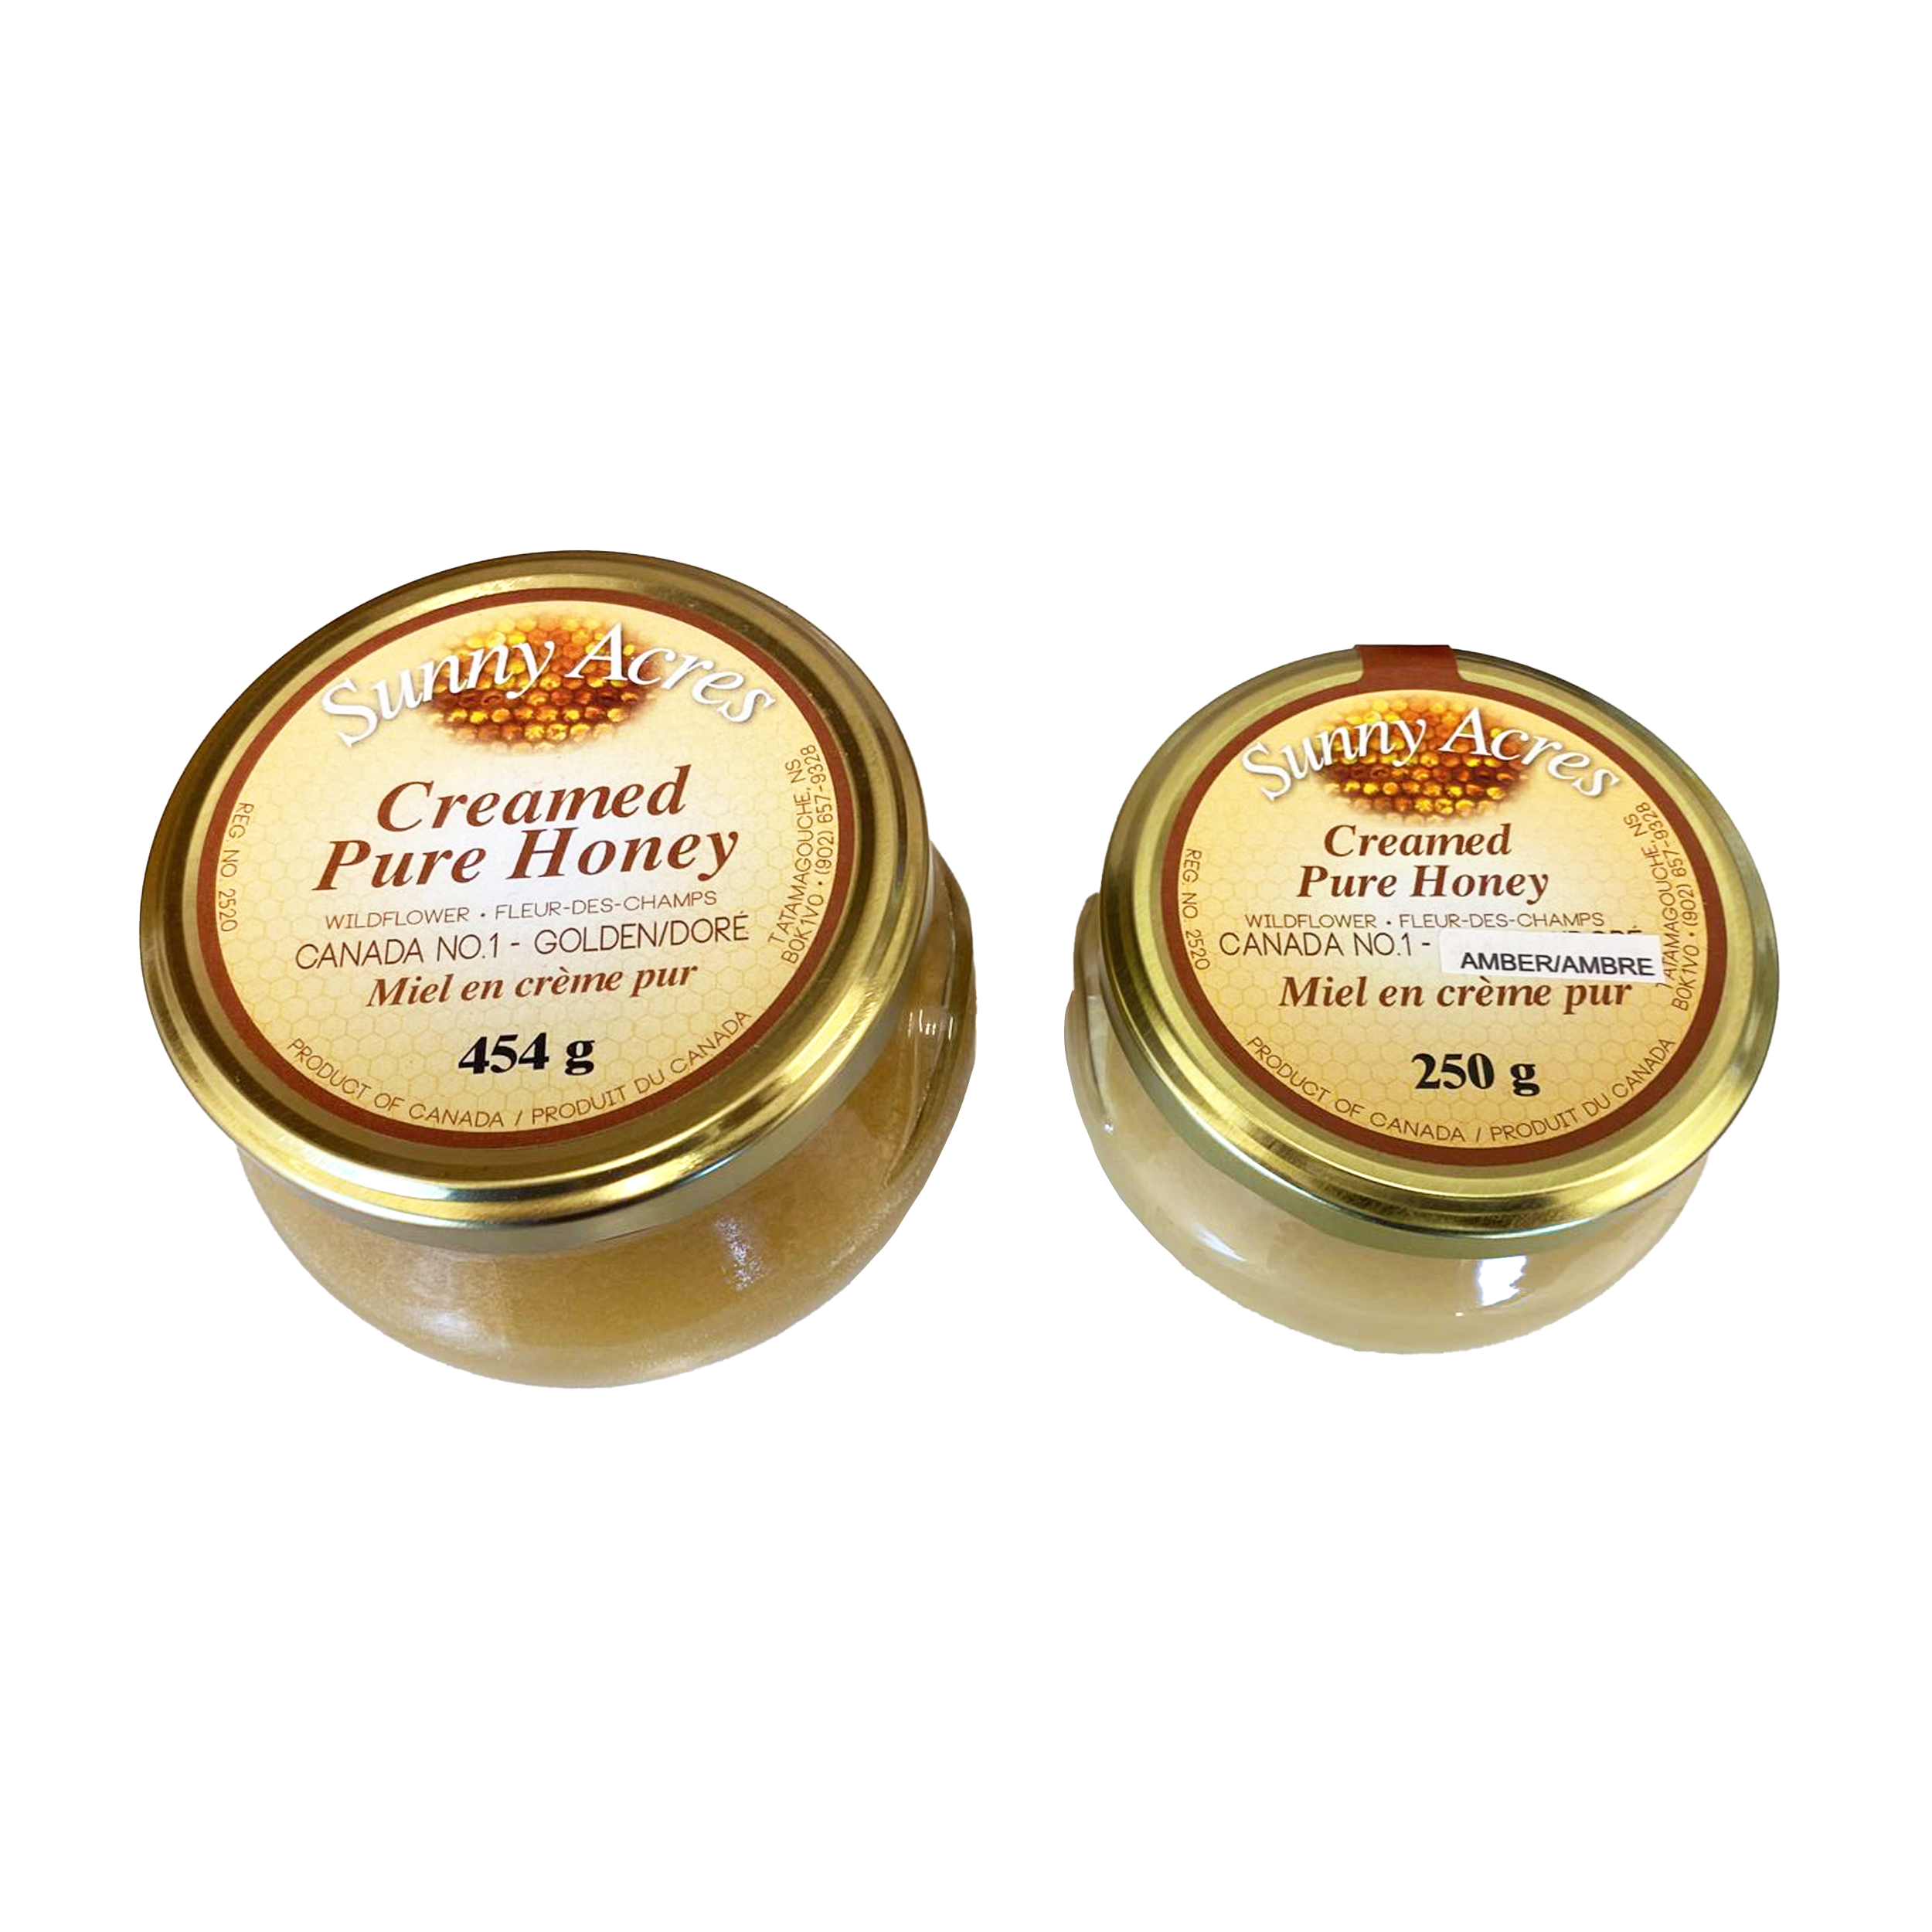 large and small jars of Nova Scotia pure creamed honey